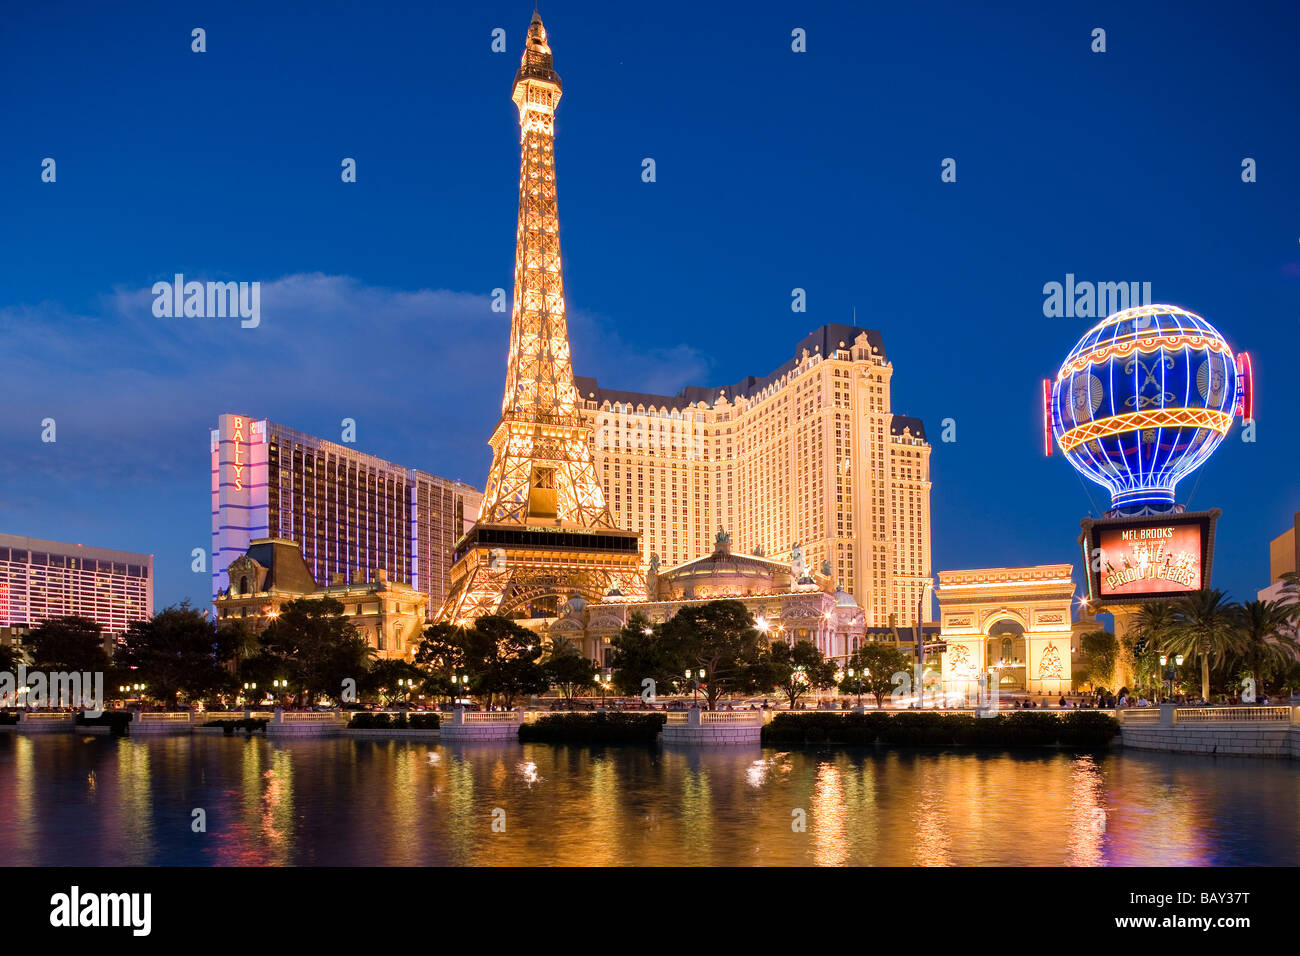 File:DSC33352, Paris Hotel and Casino, Las Vegas, Nevada, USA